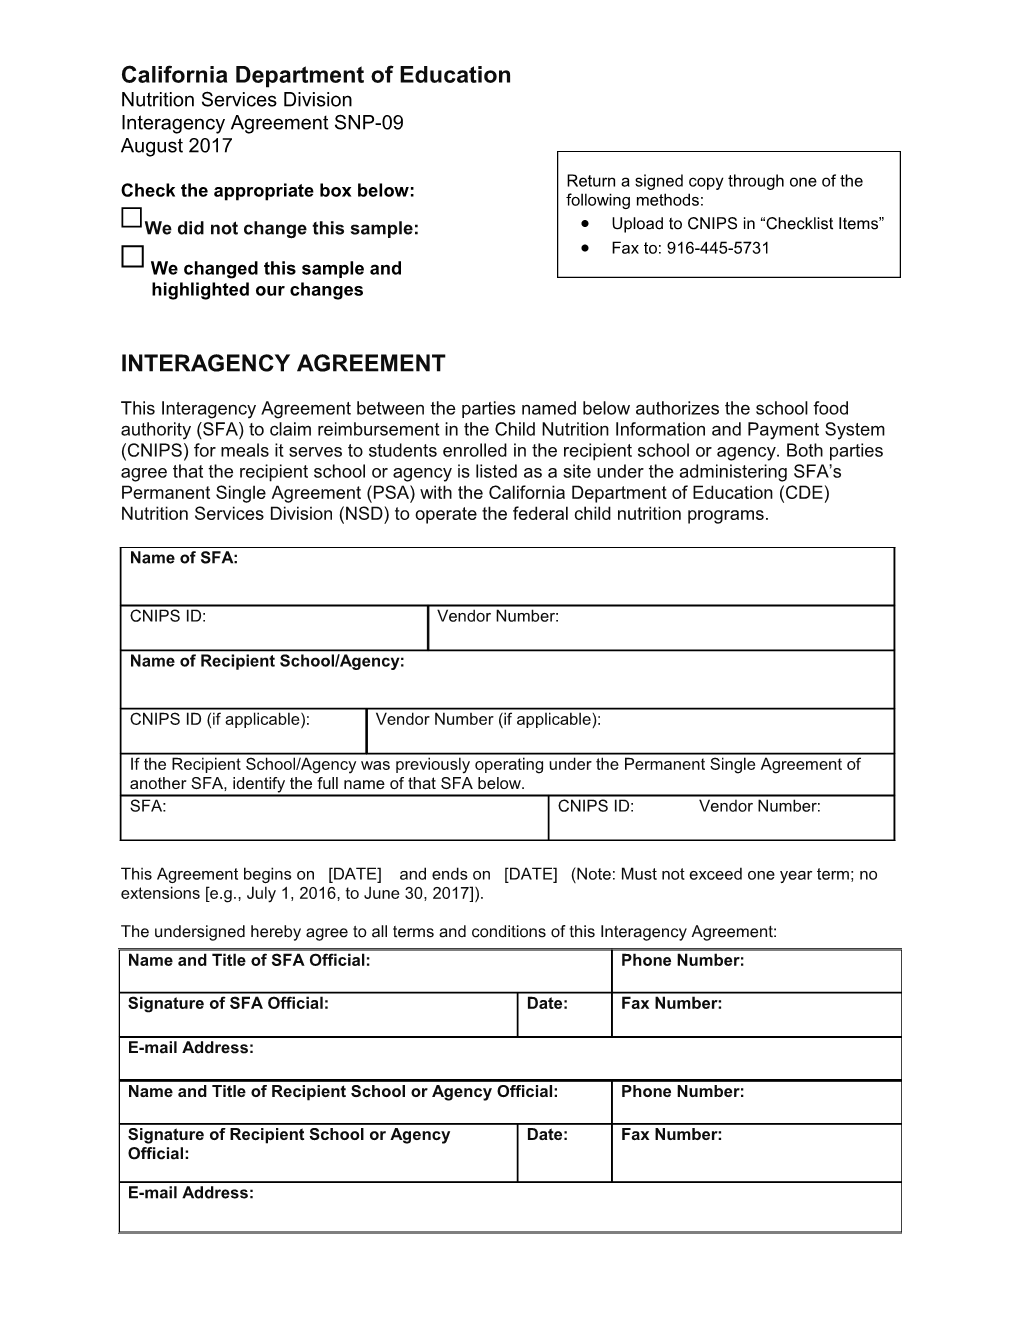 Inter-Agency Agreement - School Nutrition (CA Dept of Education)